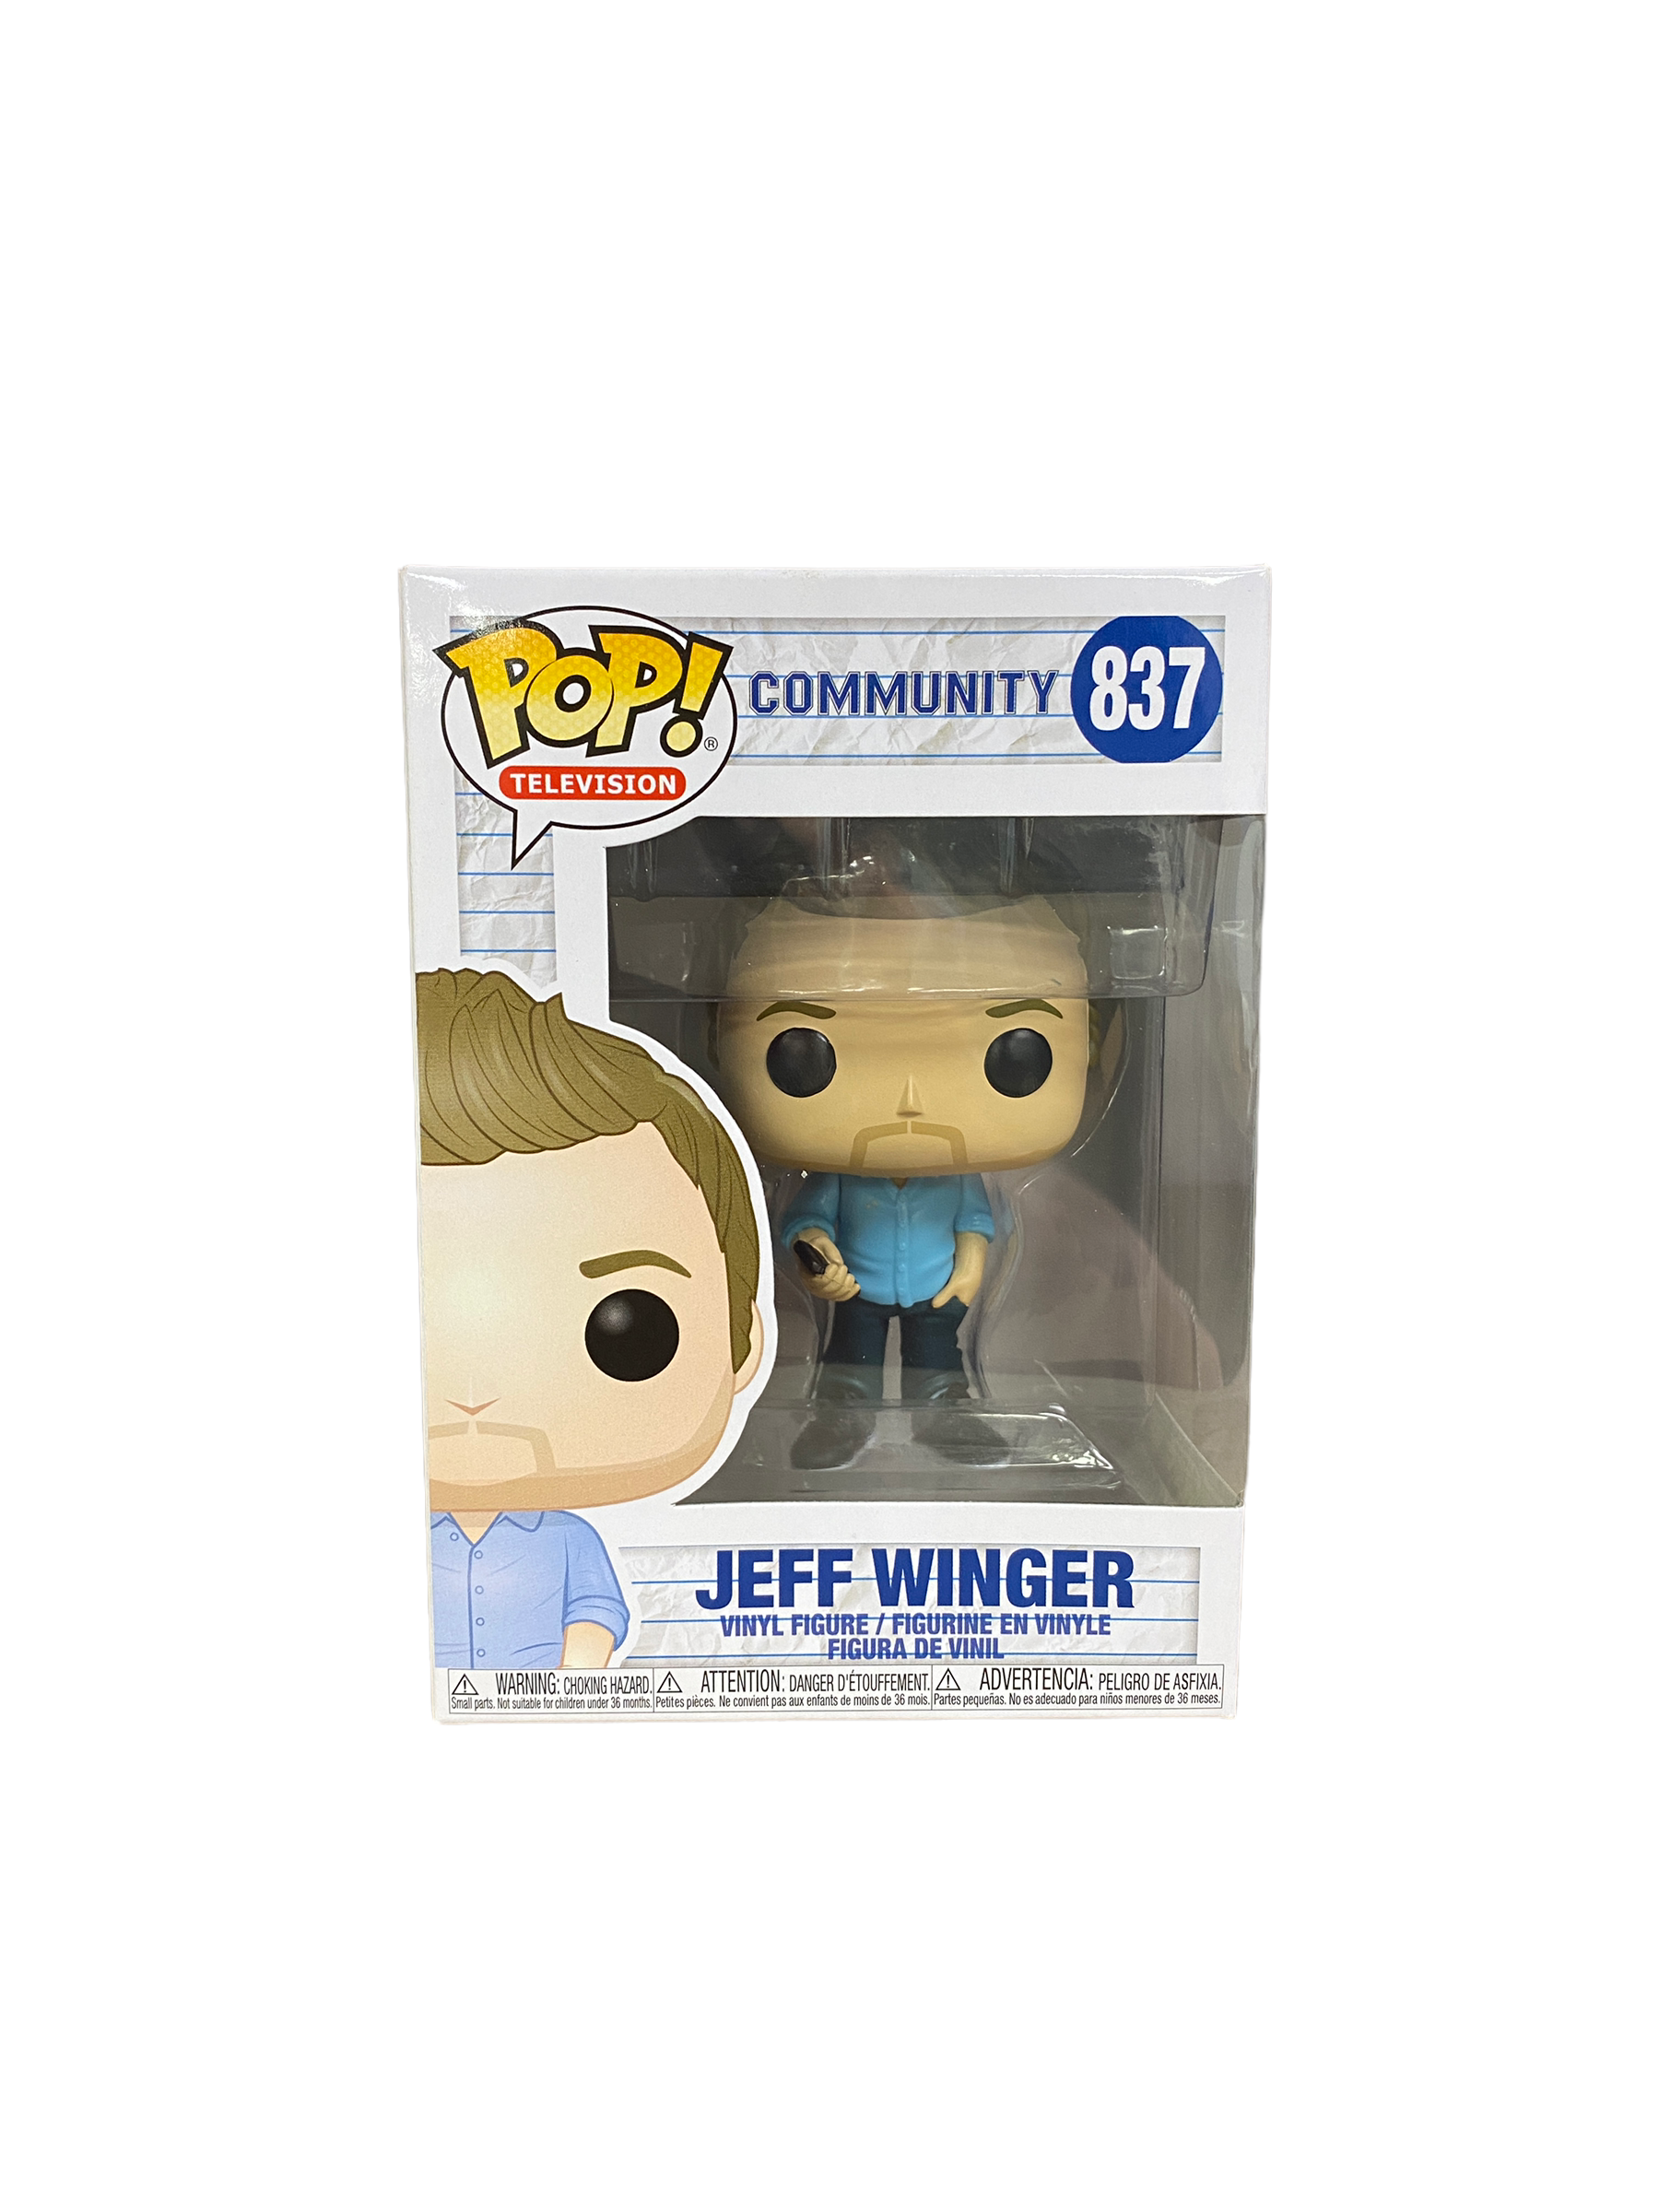 Jeff Winger #837 Funko Pop! - Community - 2019 Pop! - Condition 9.5/10